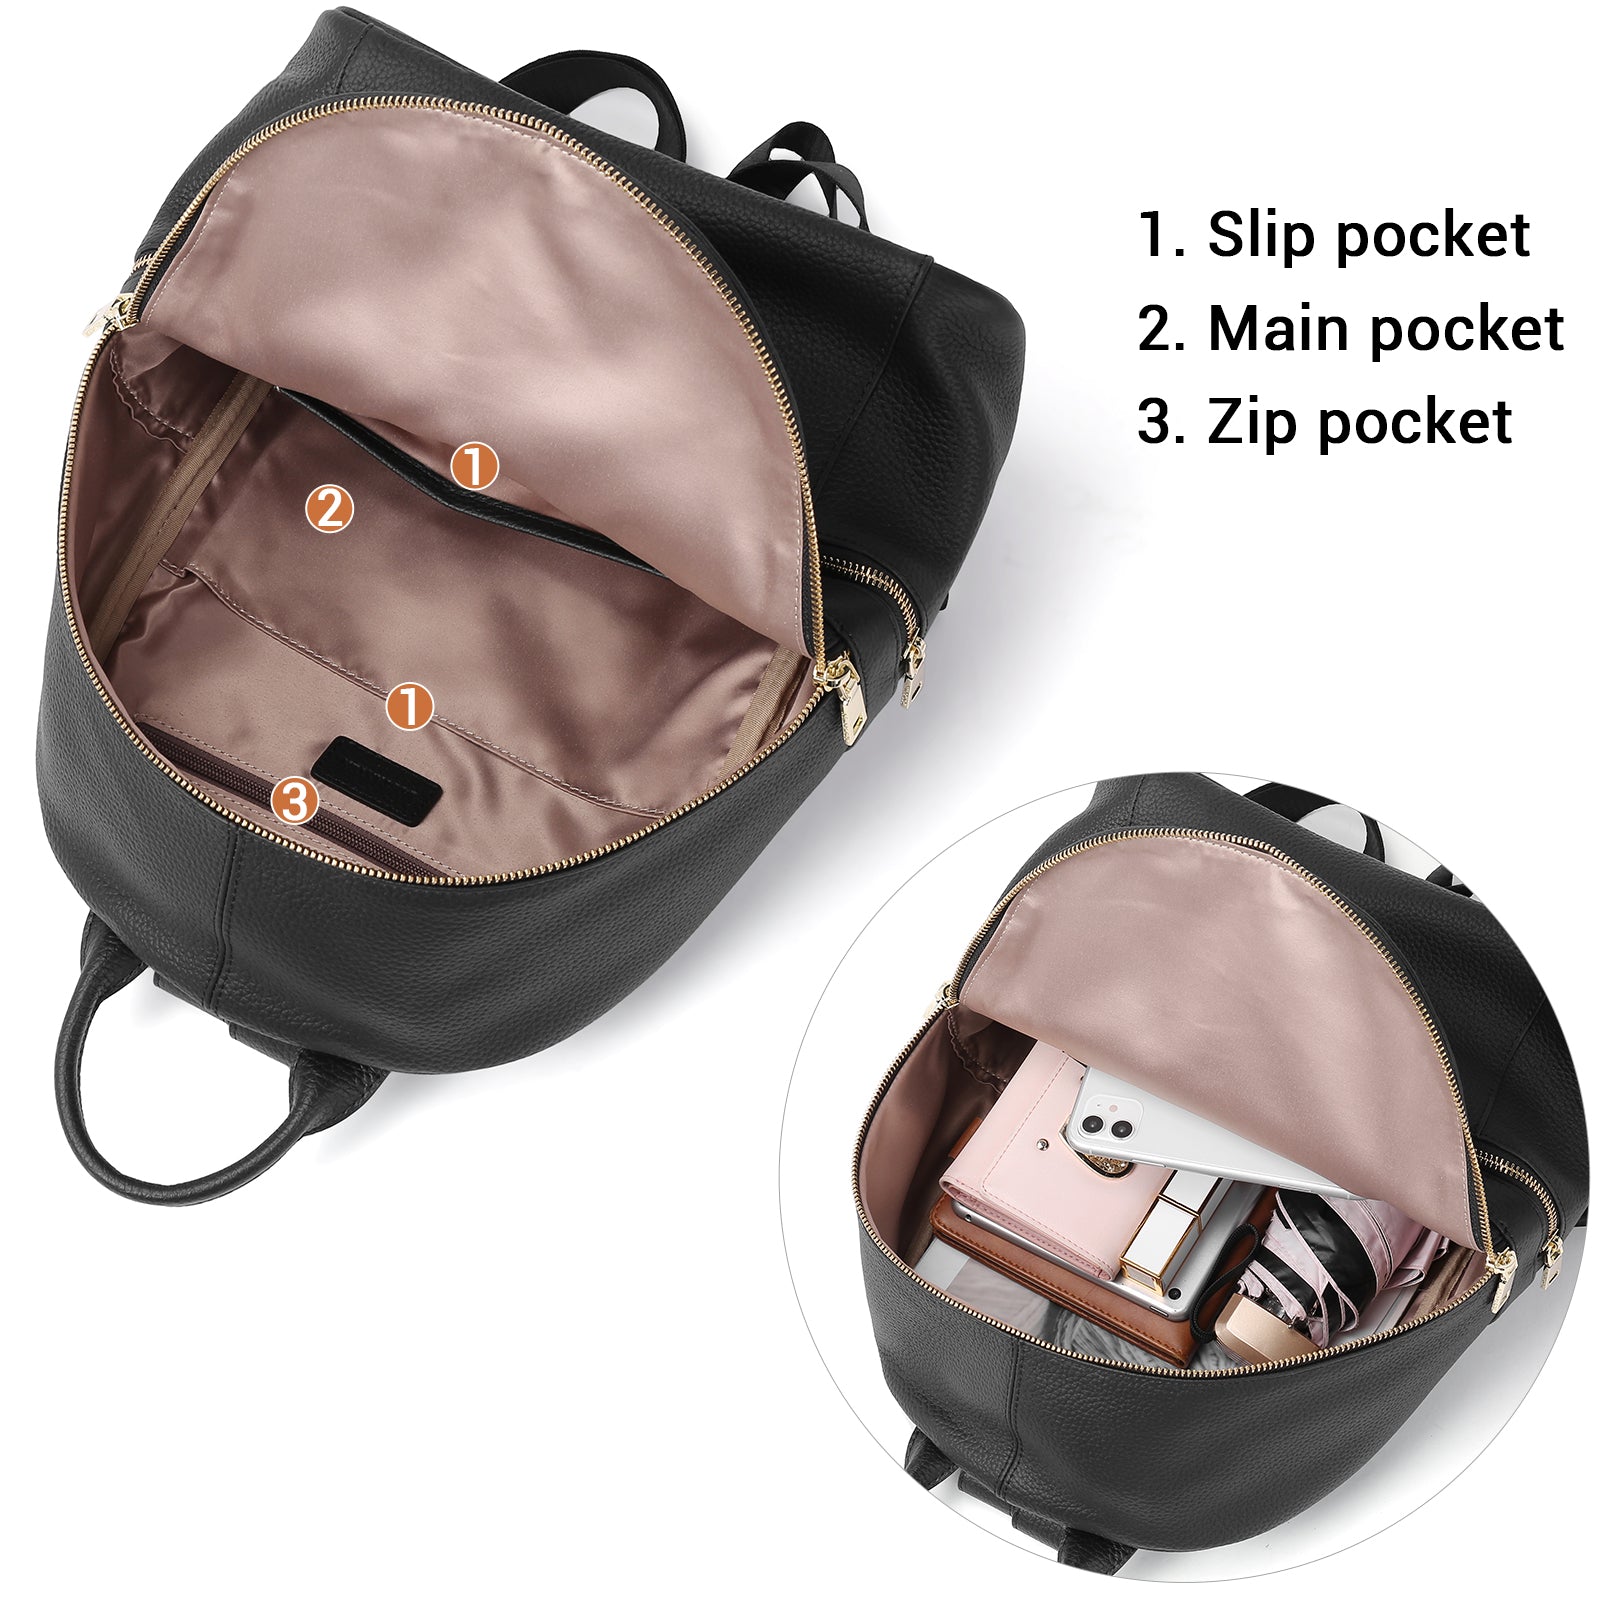 Nombongo Genuine Leather Backpack —Bostanten – BOSTANTEN